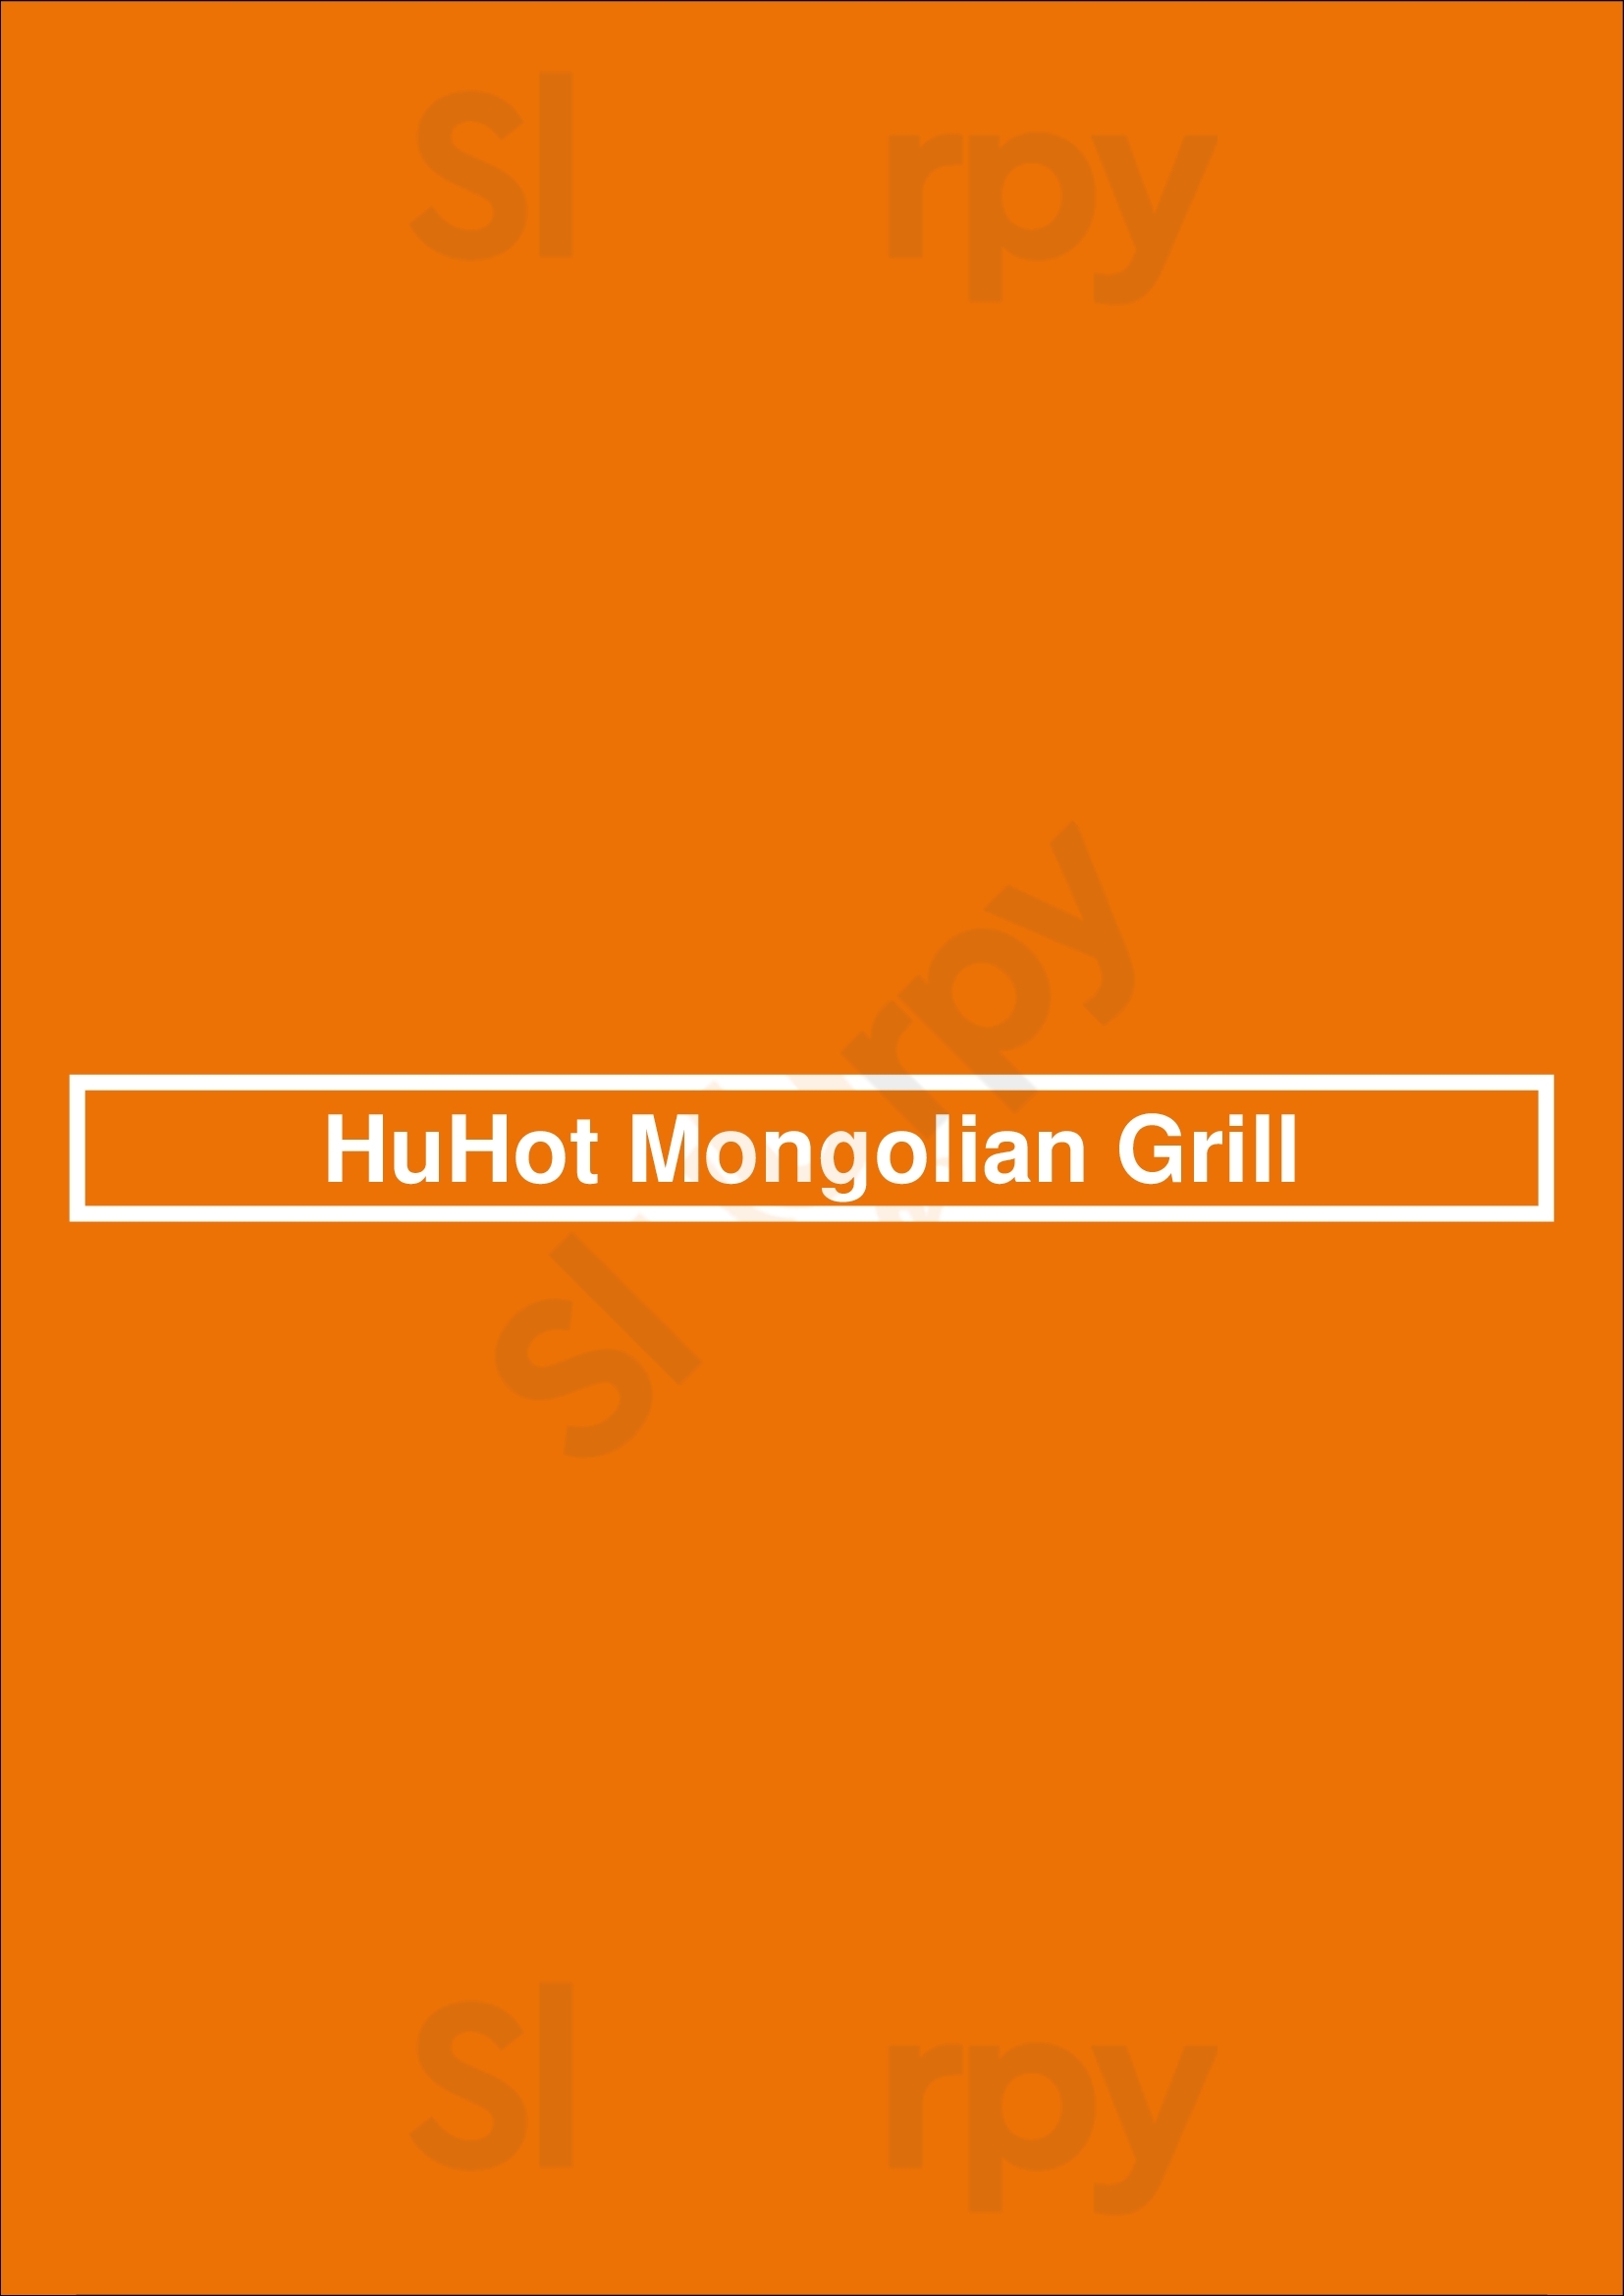 Huhot Mongolian Grill Colorado Springs Menu - 1